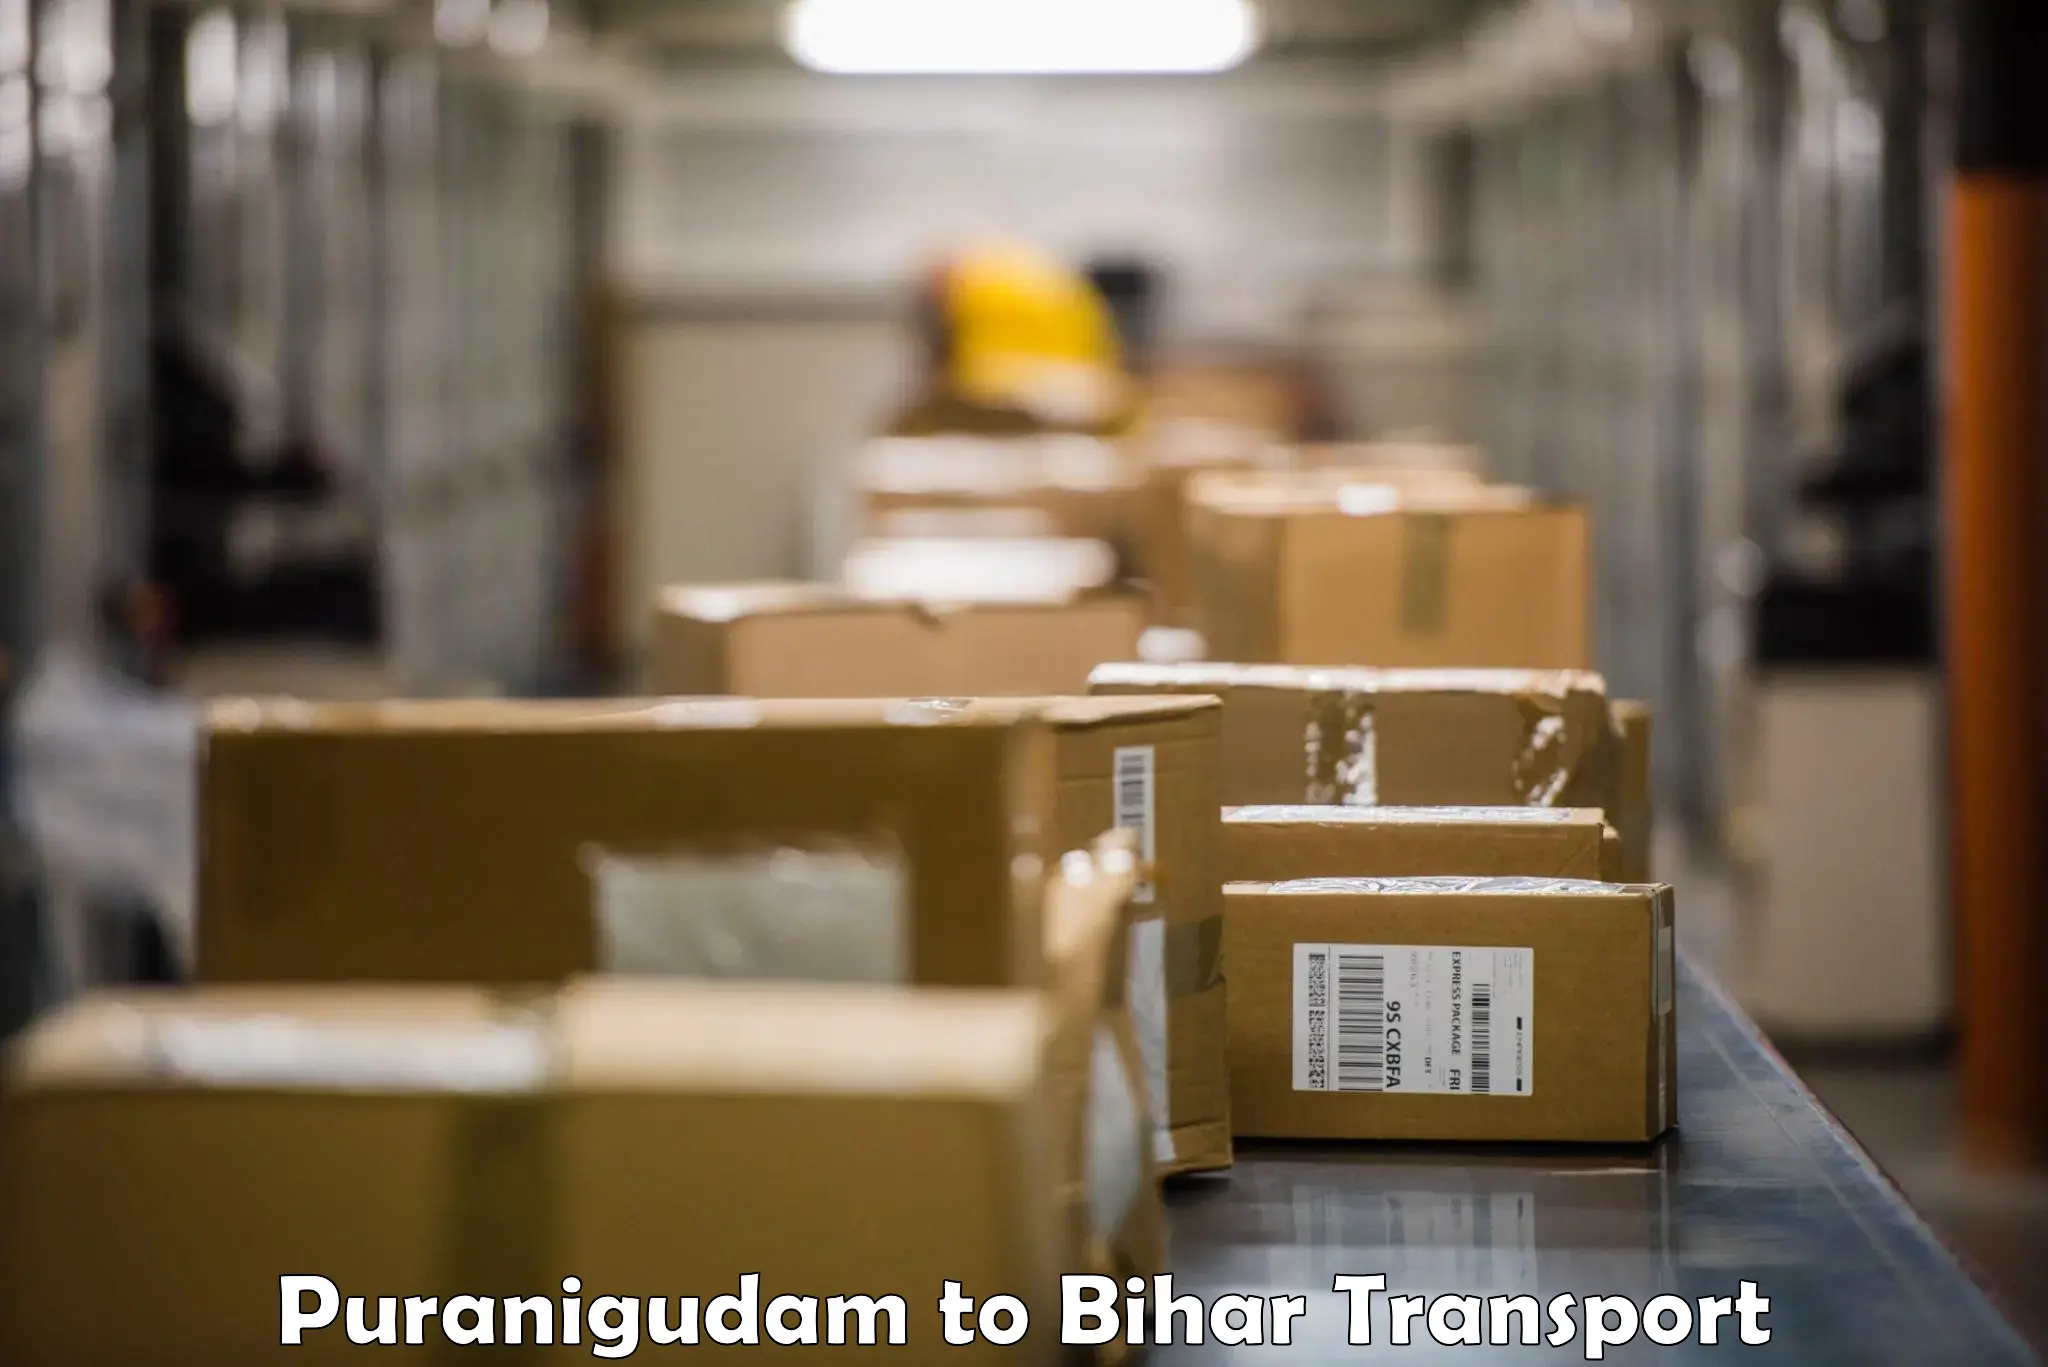 Furniture transport service Puranigudam to Bihar